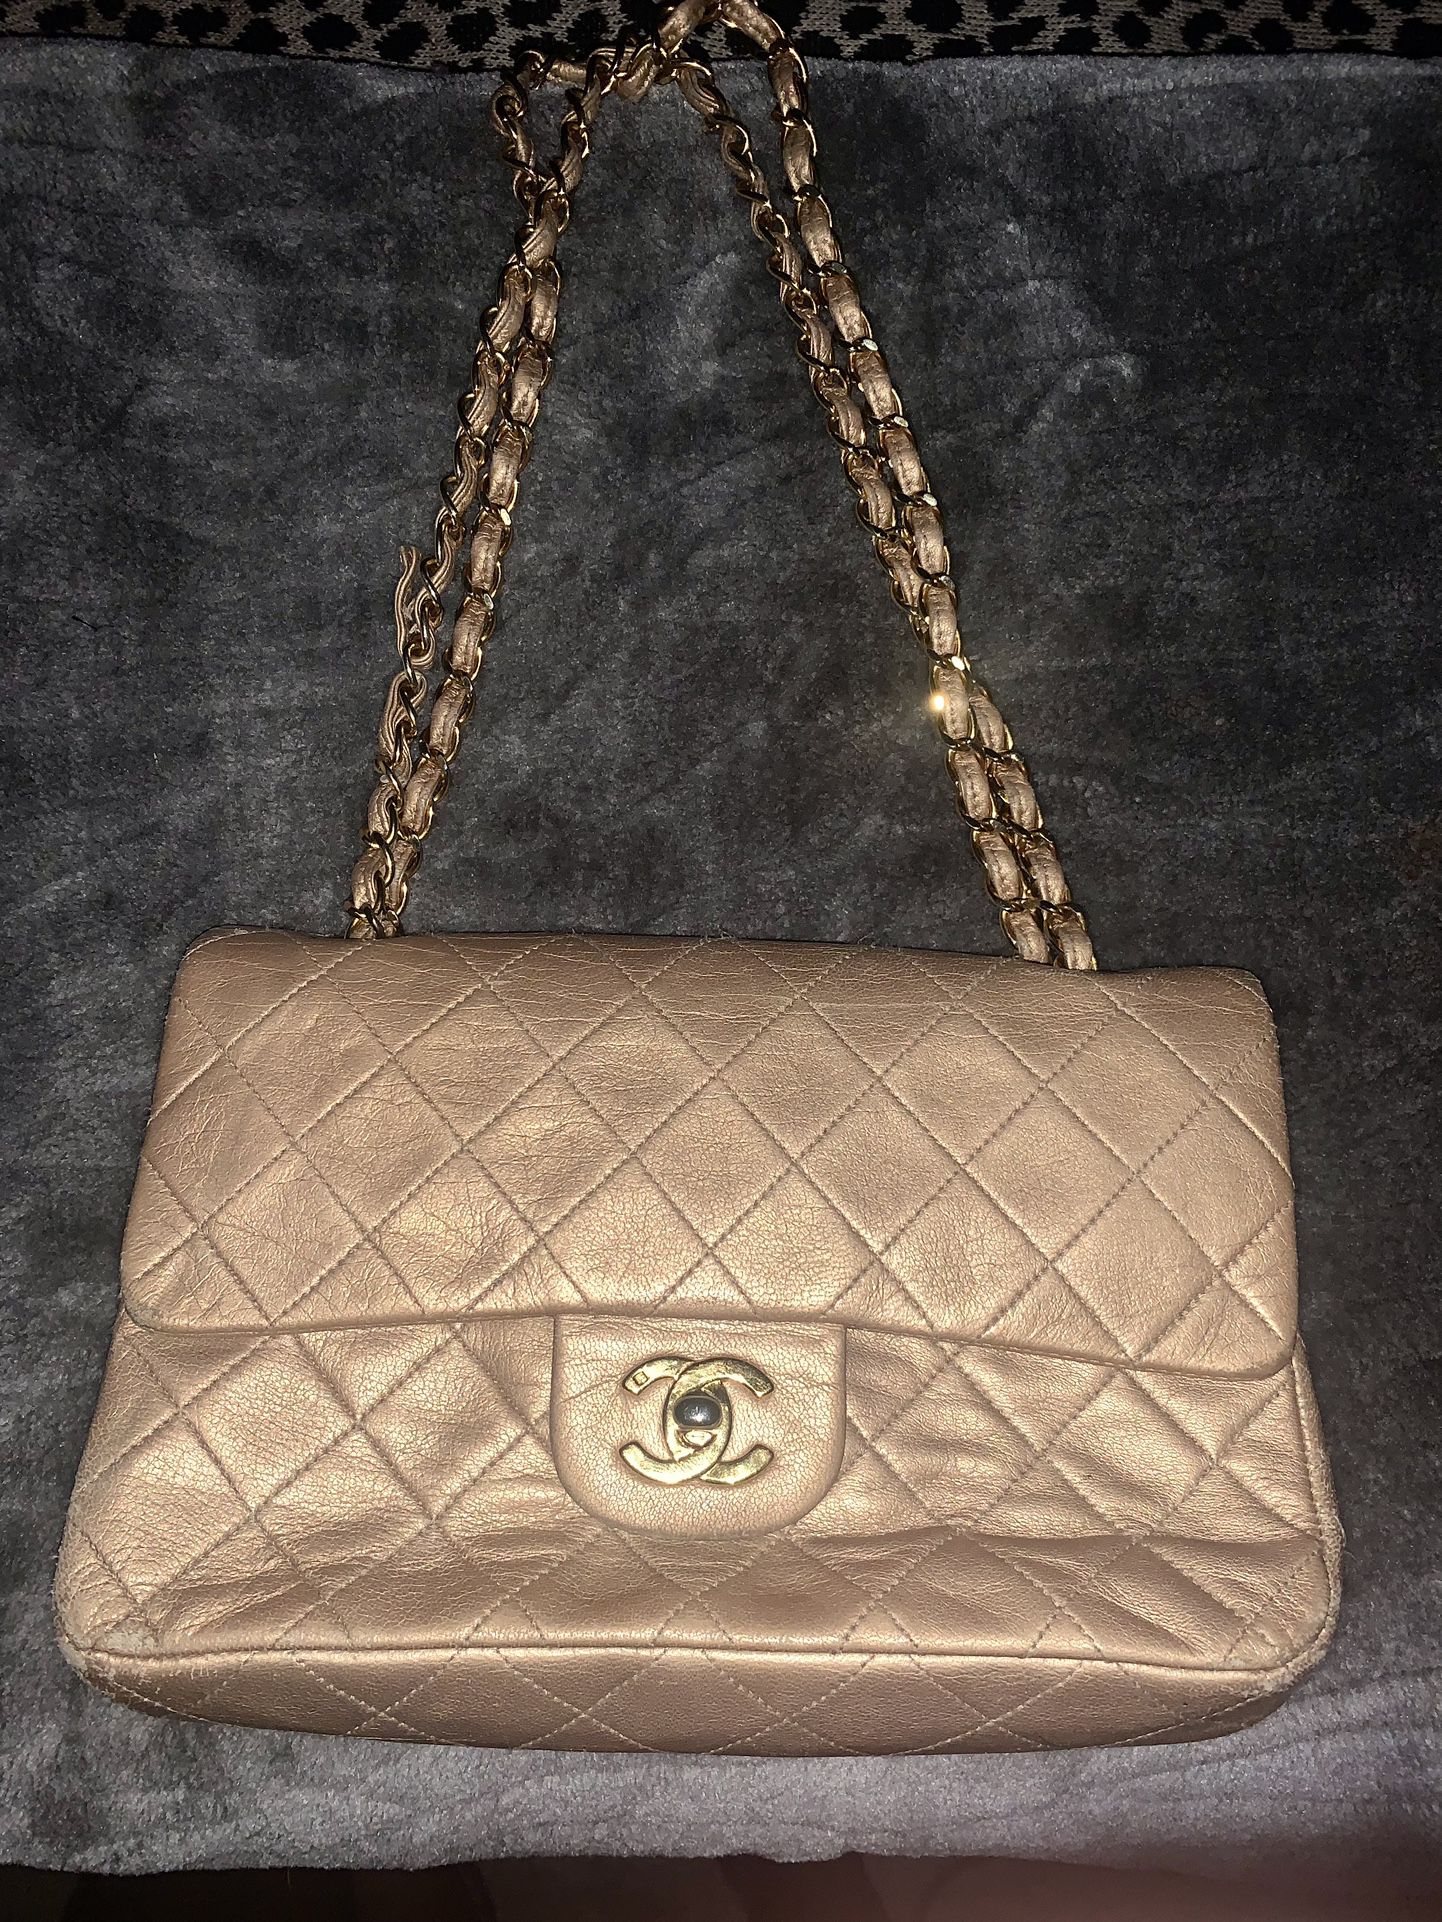 Chanel Gold Metallic Bag “Vintage”